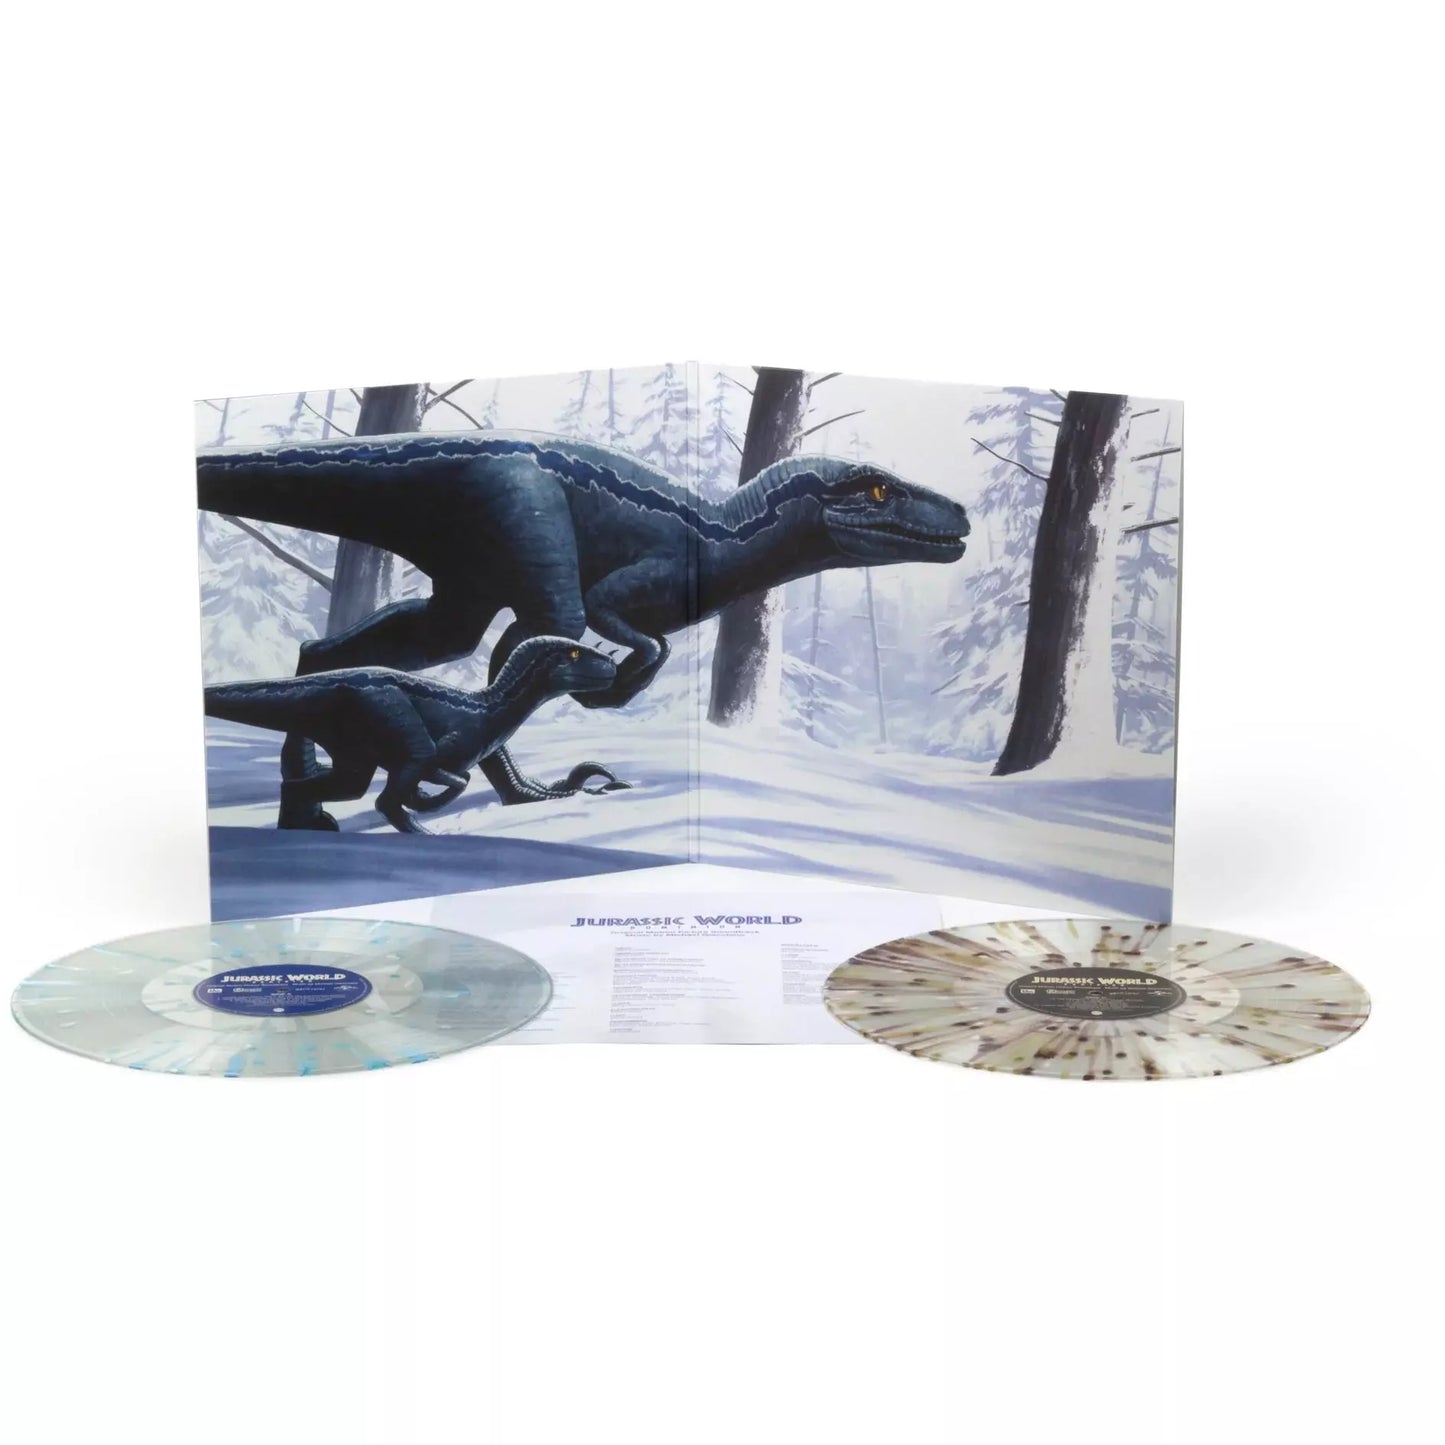 Jurassic World Dominion - LP de la banda sonora original de la película